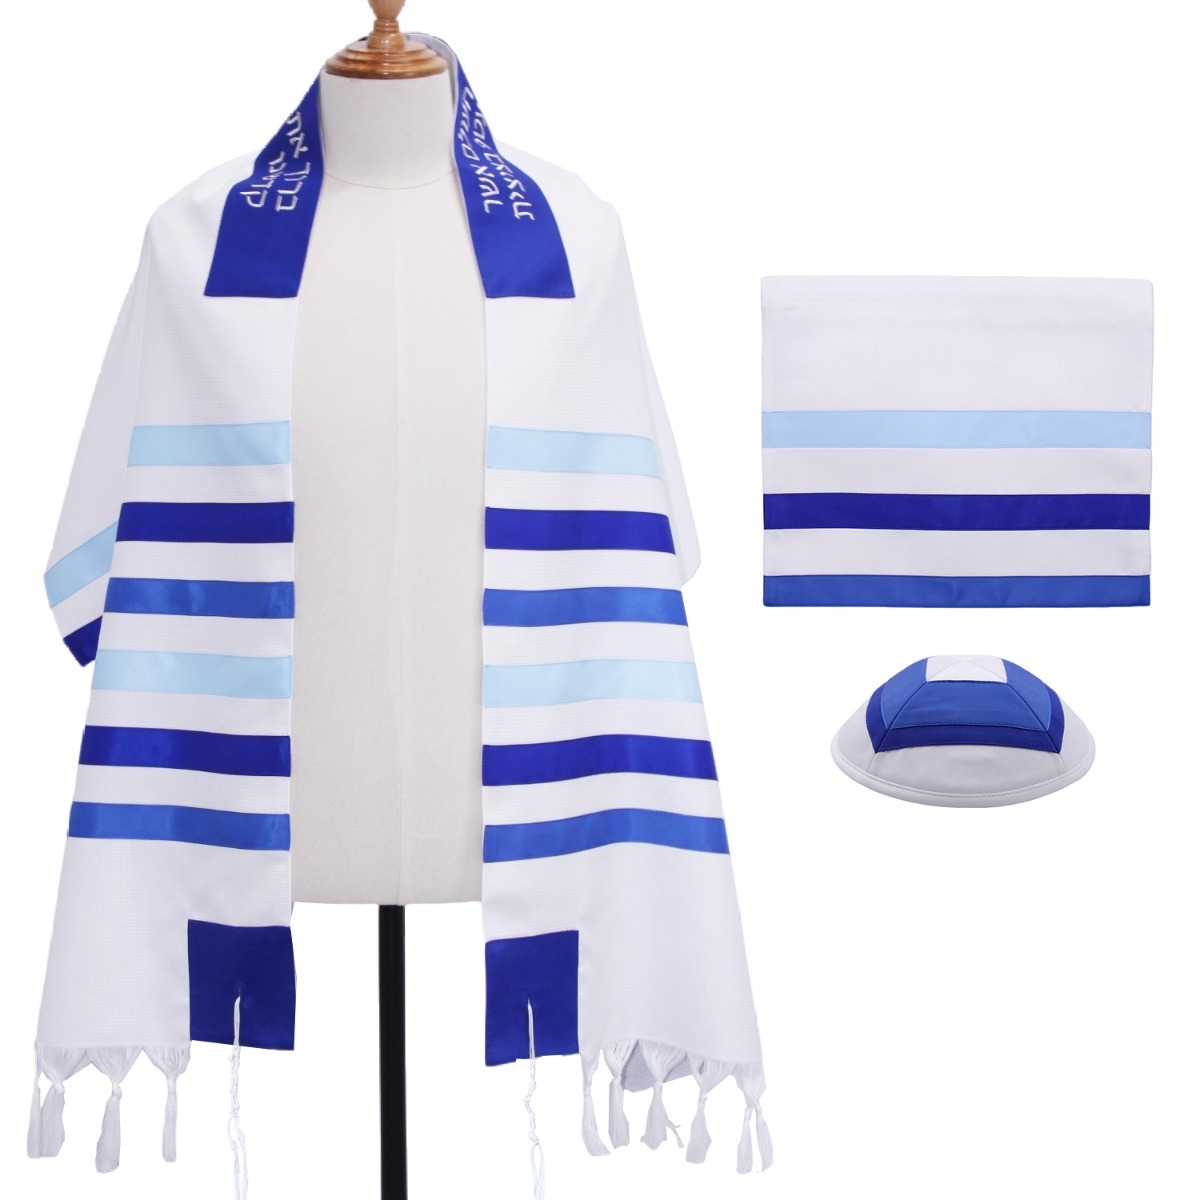 Super Acrylic Shabbat Tallit - Light and Royal Blue Multi-Stripes - With Kippah and Bag - 1